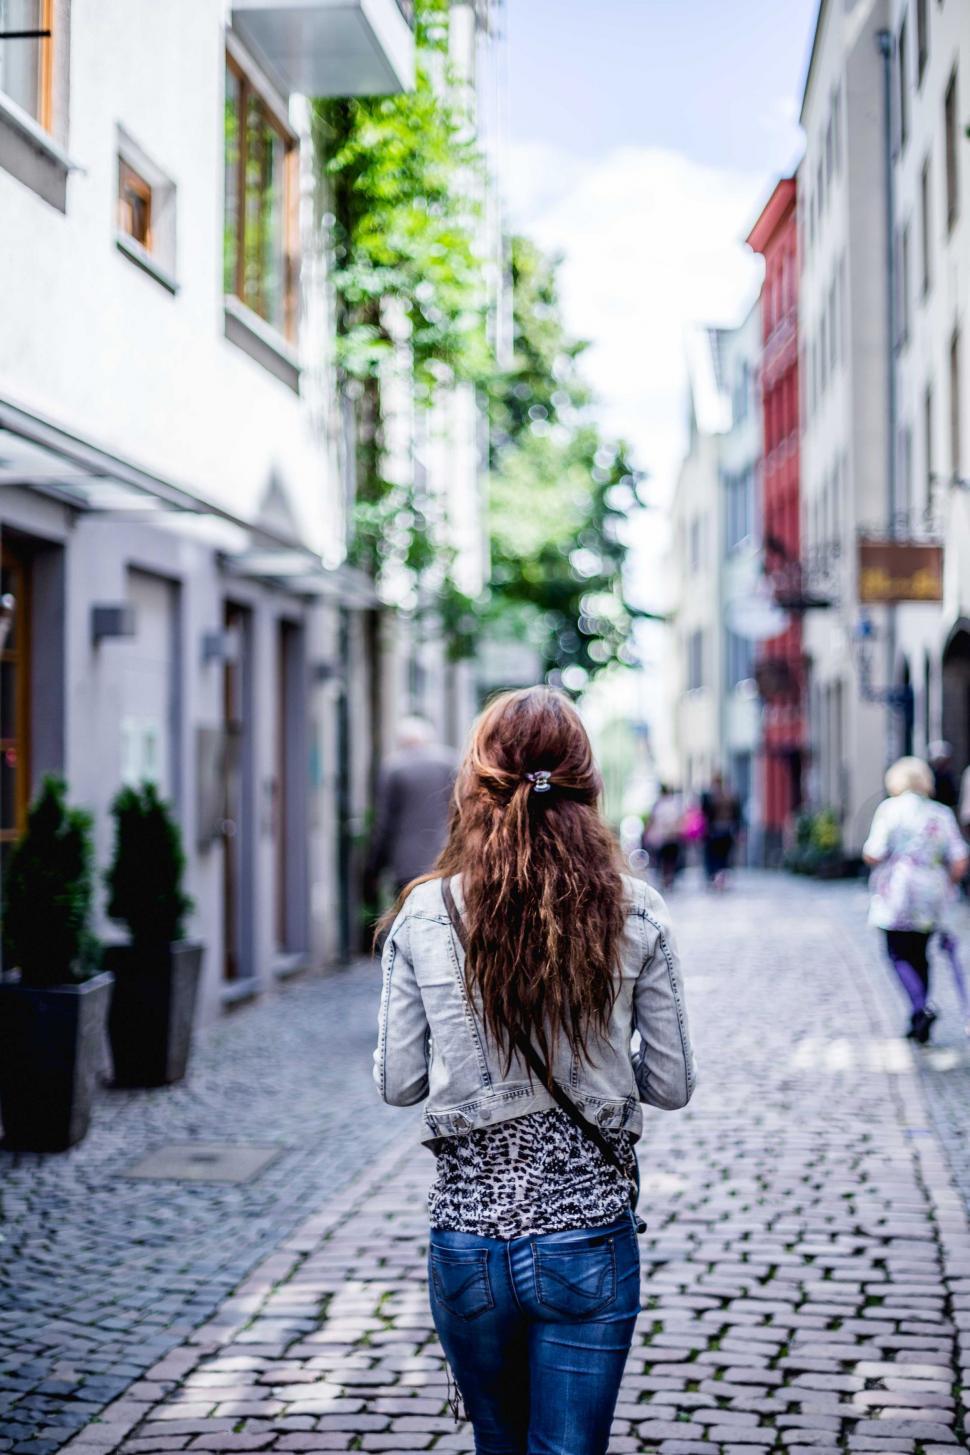 Free Image of Woman Walking Down a Cobblestone Street 